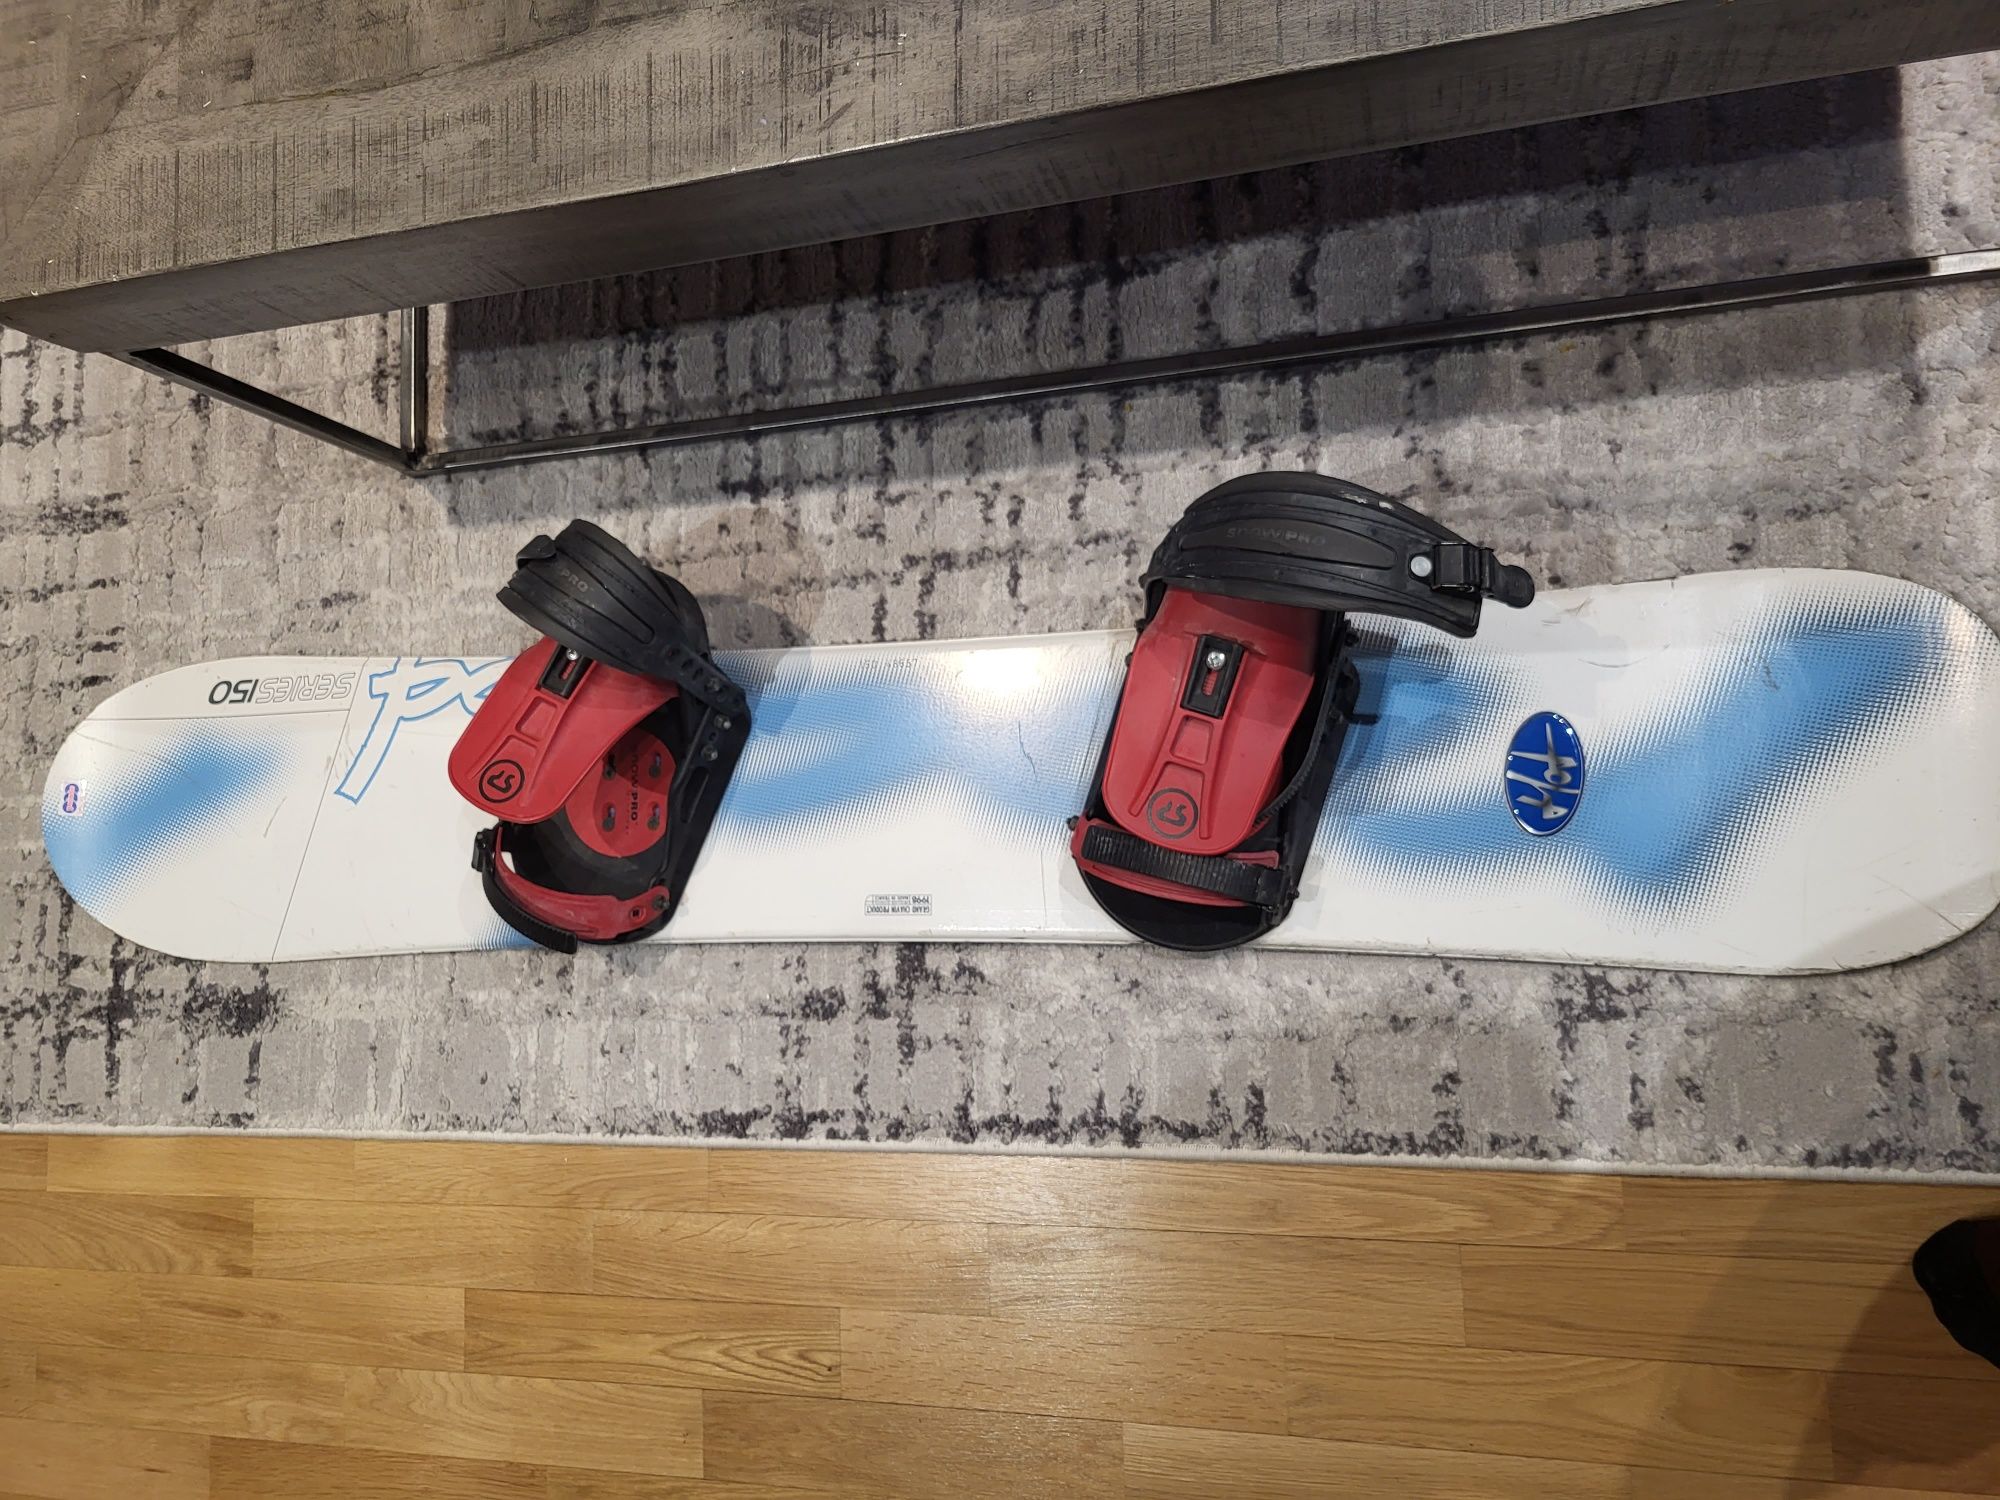 Snowboard komplet. Deska 155 cm, wiązania, buty.